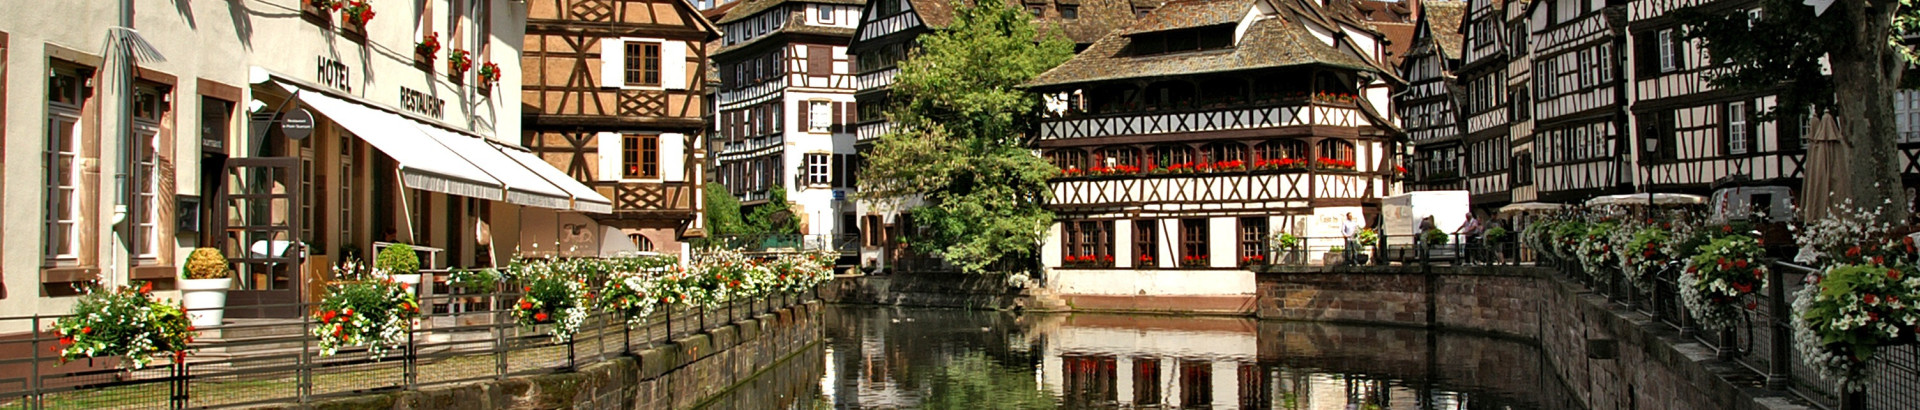 Strasbourg City Image